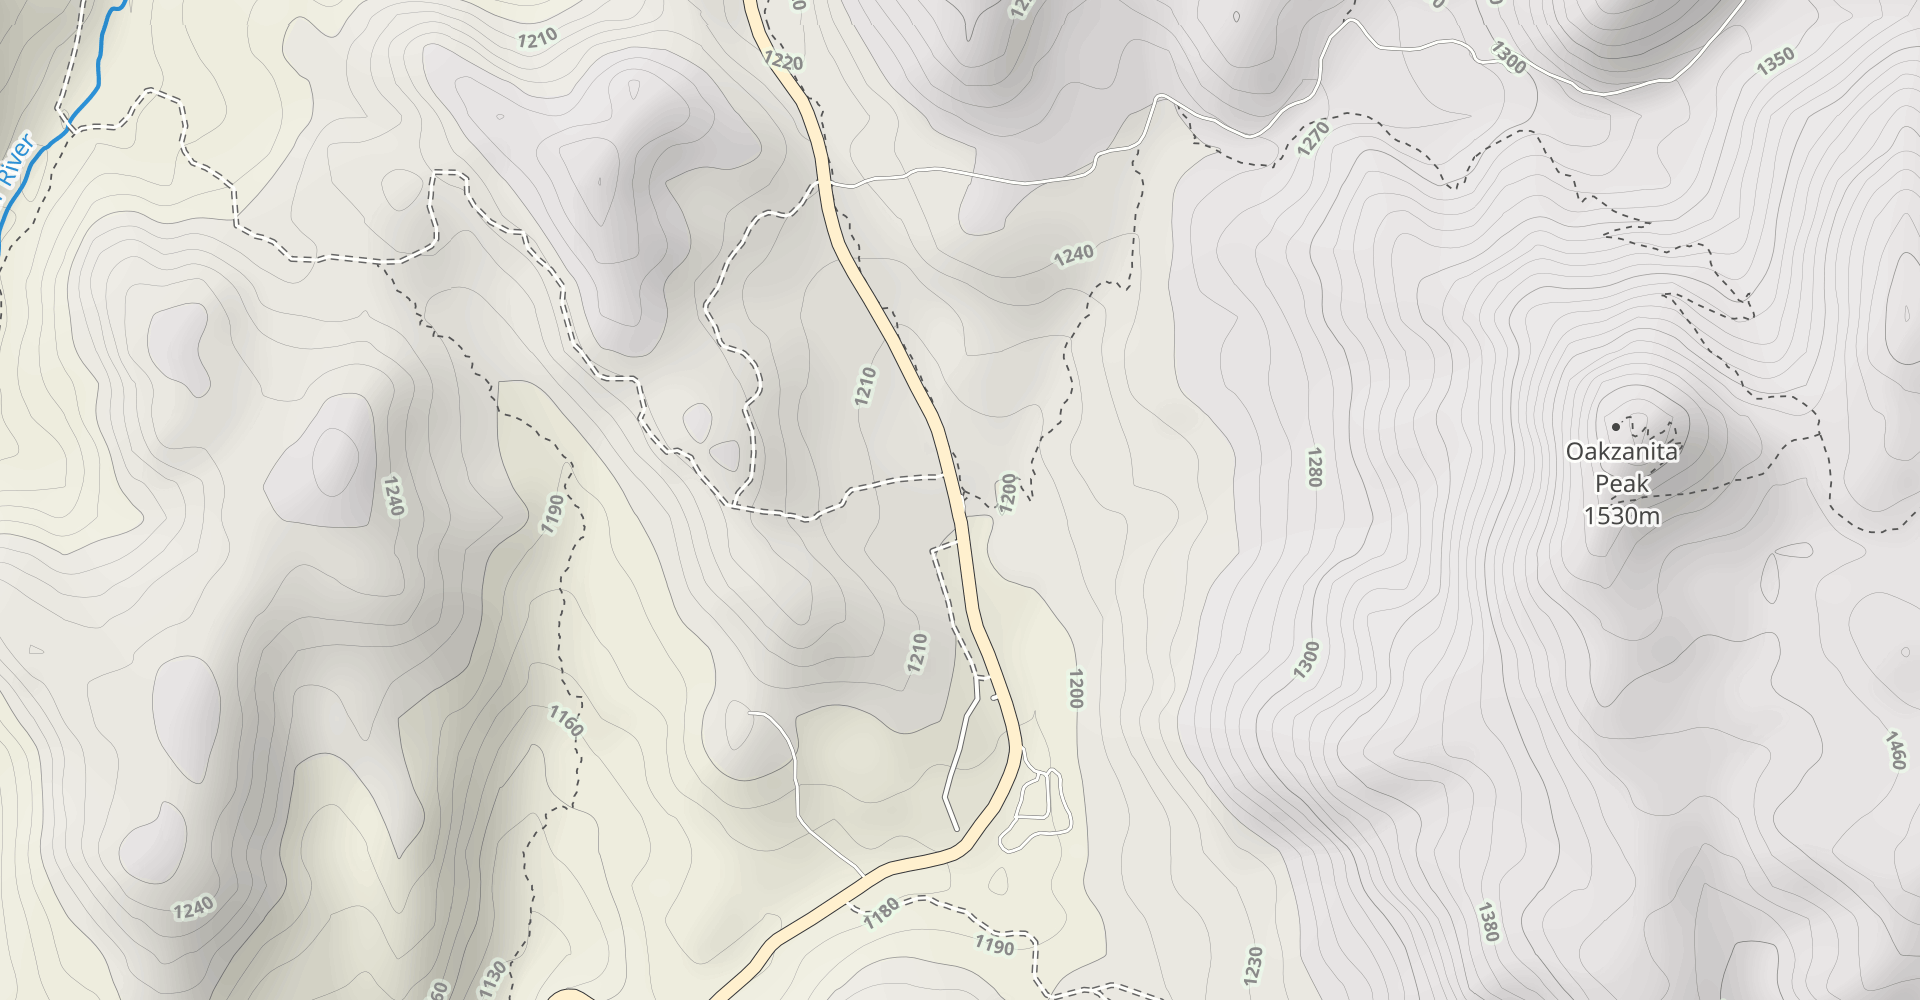 Oakzanita Peak Trail